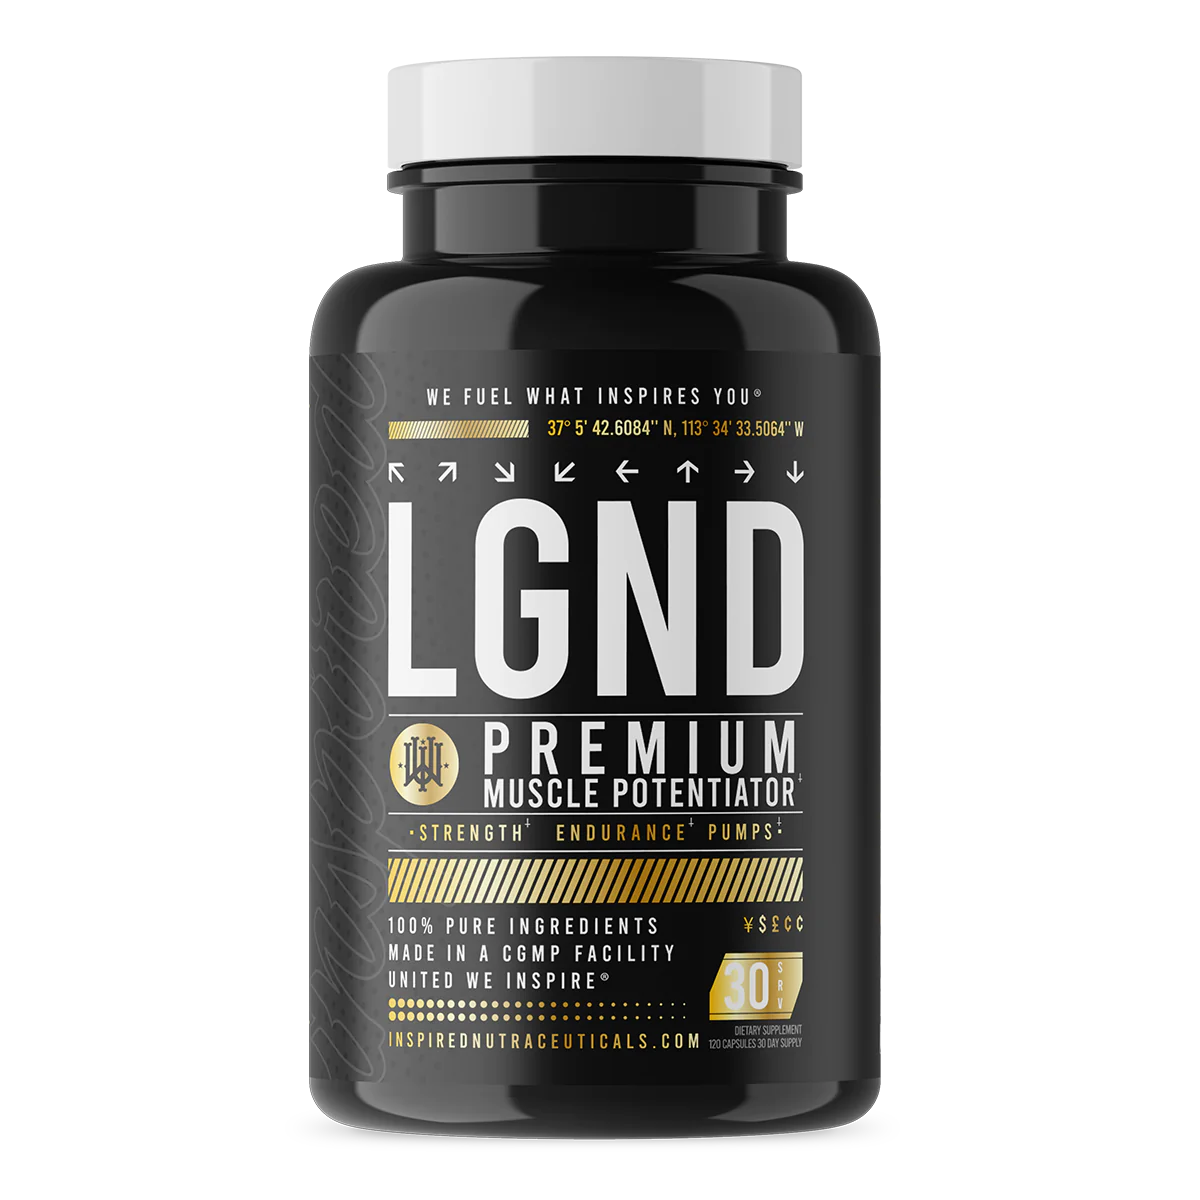 LGND Premium Muscle Potentiator